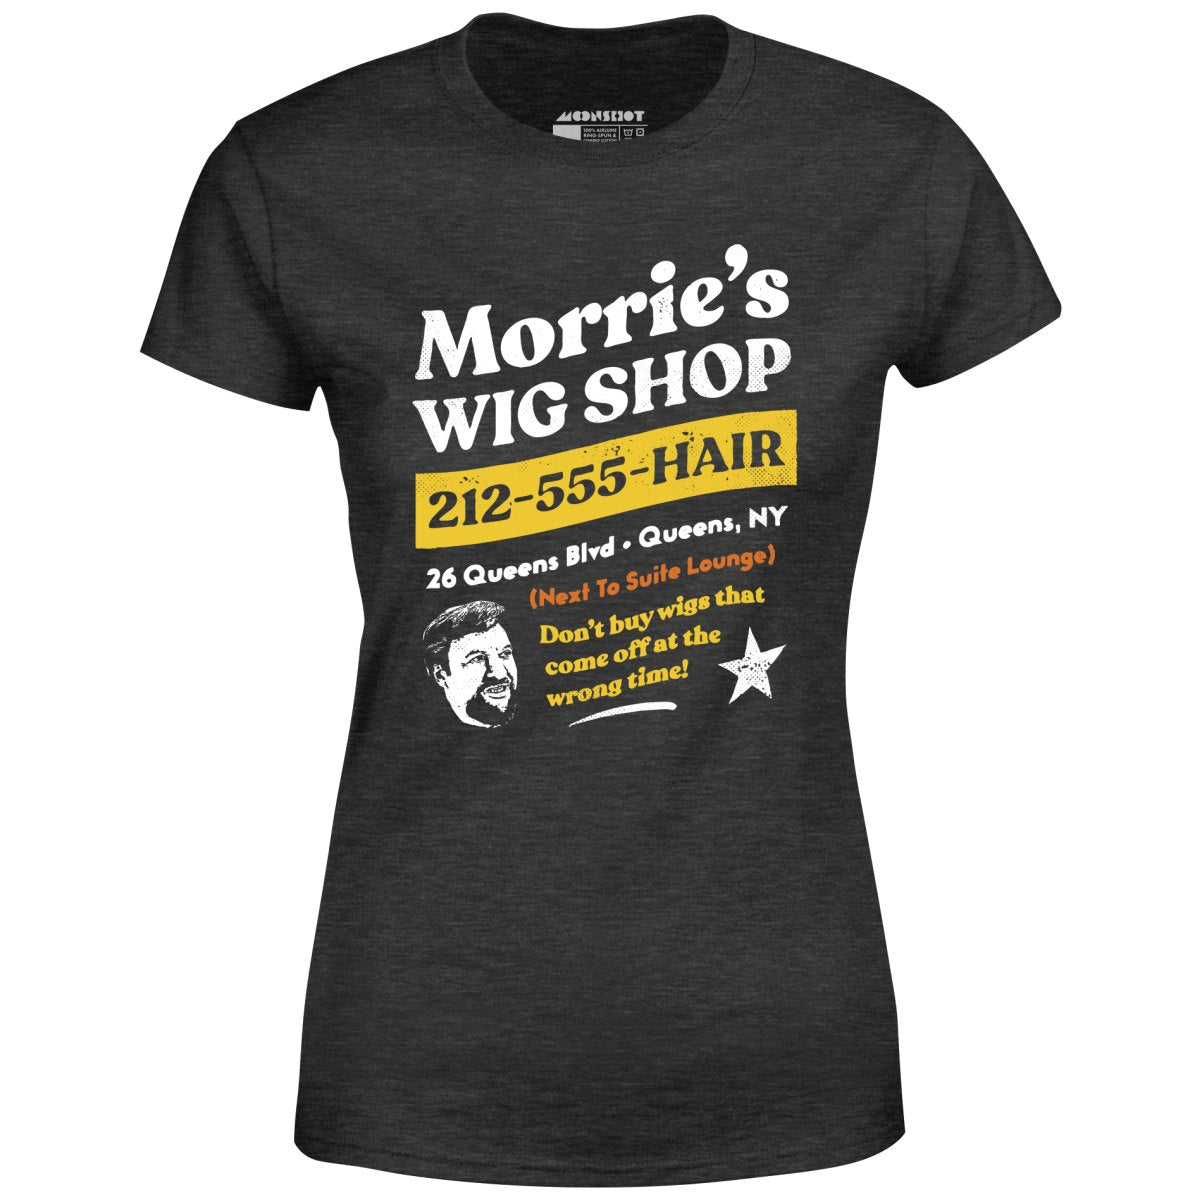 Morrie's Wig Shop - Women's T-Shirt